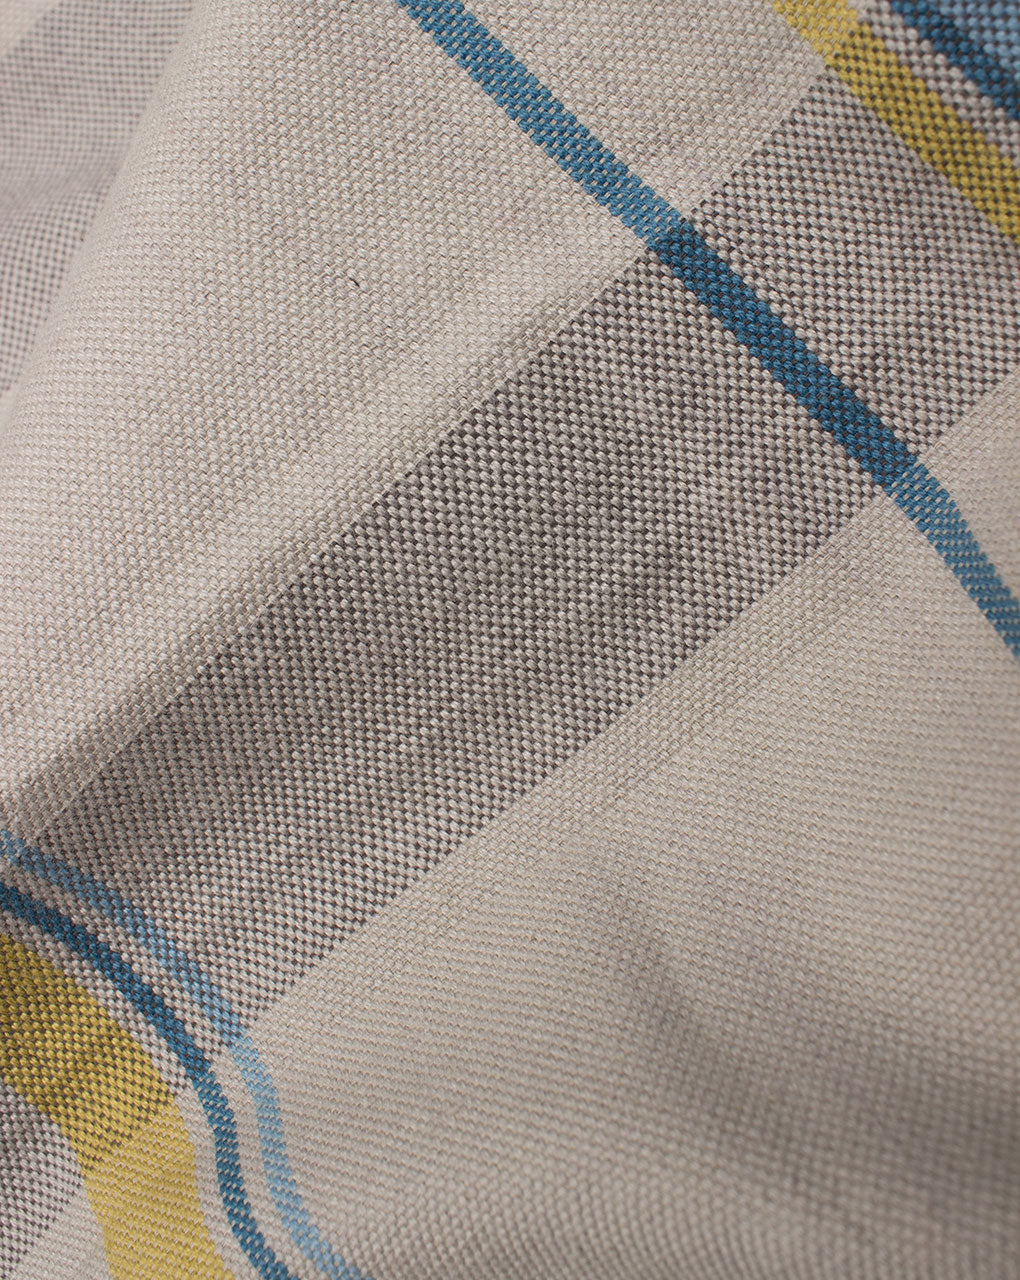 Woven Pure Handloom Cotton Fabric - Fabriclore.com